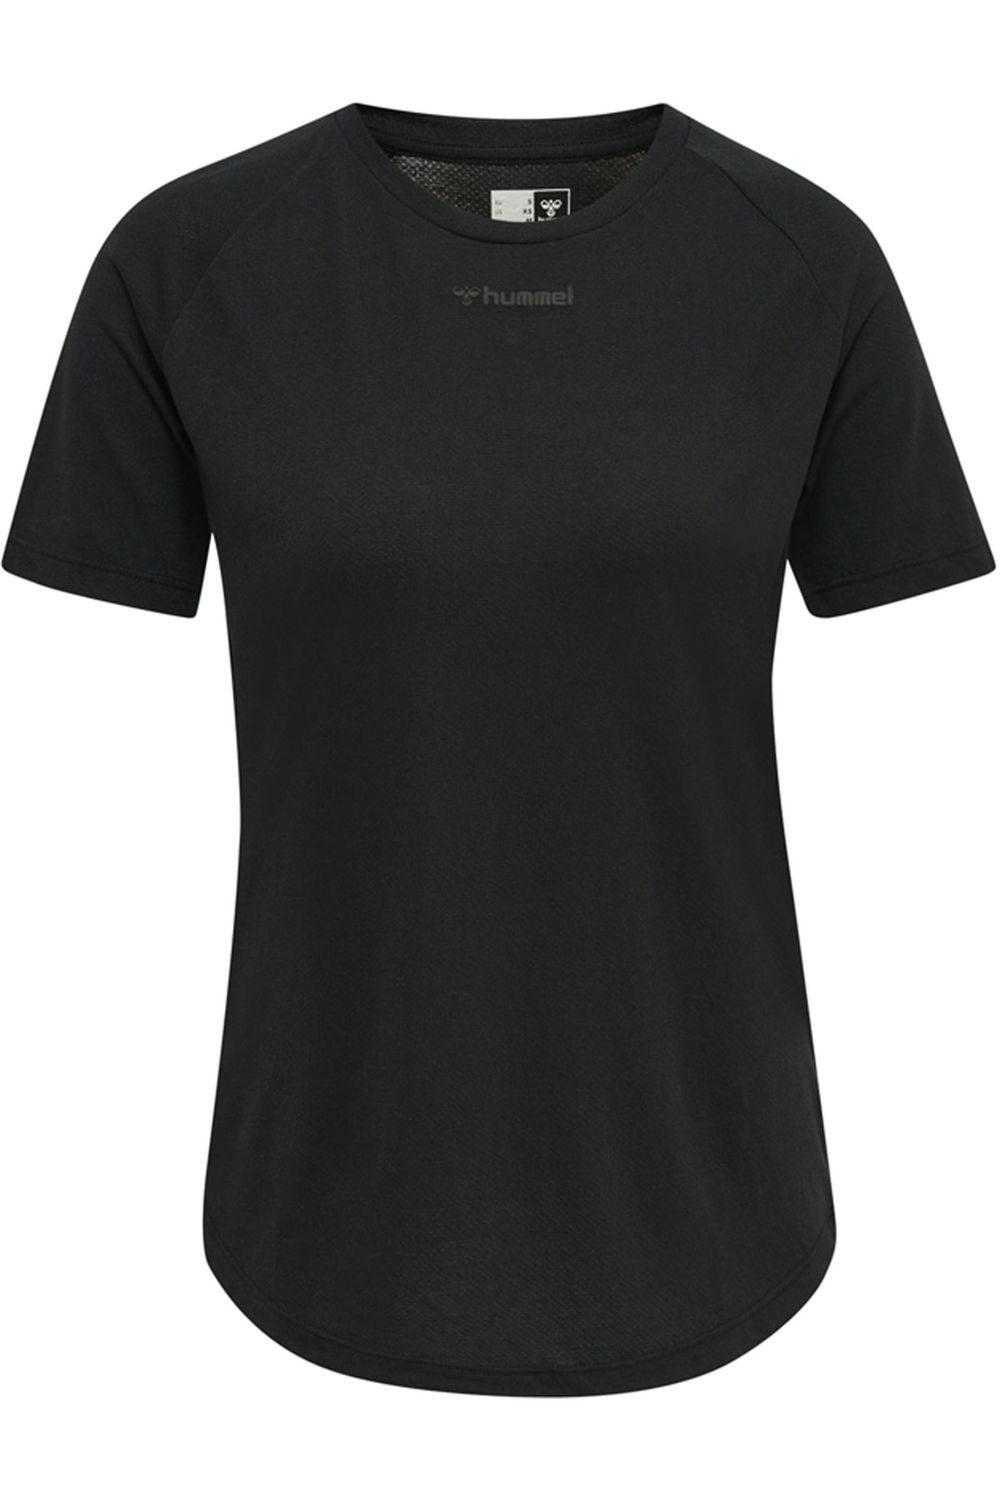 HUMMEL T-Shirt - Braun - Fit Trendyol Regular 